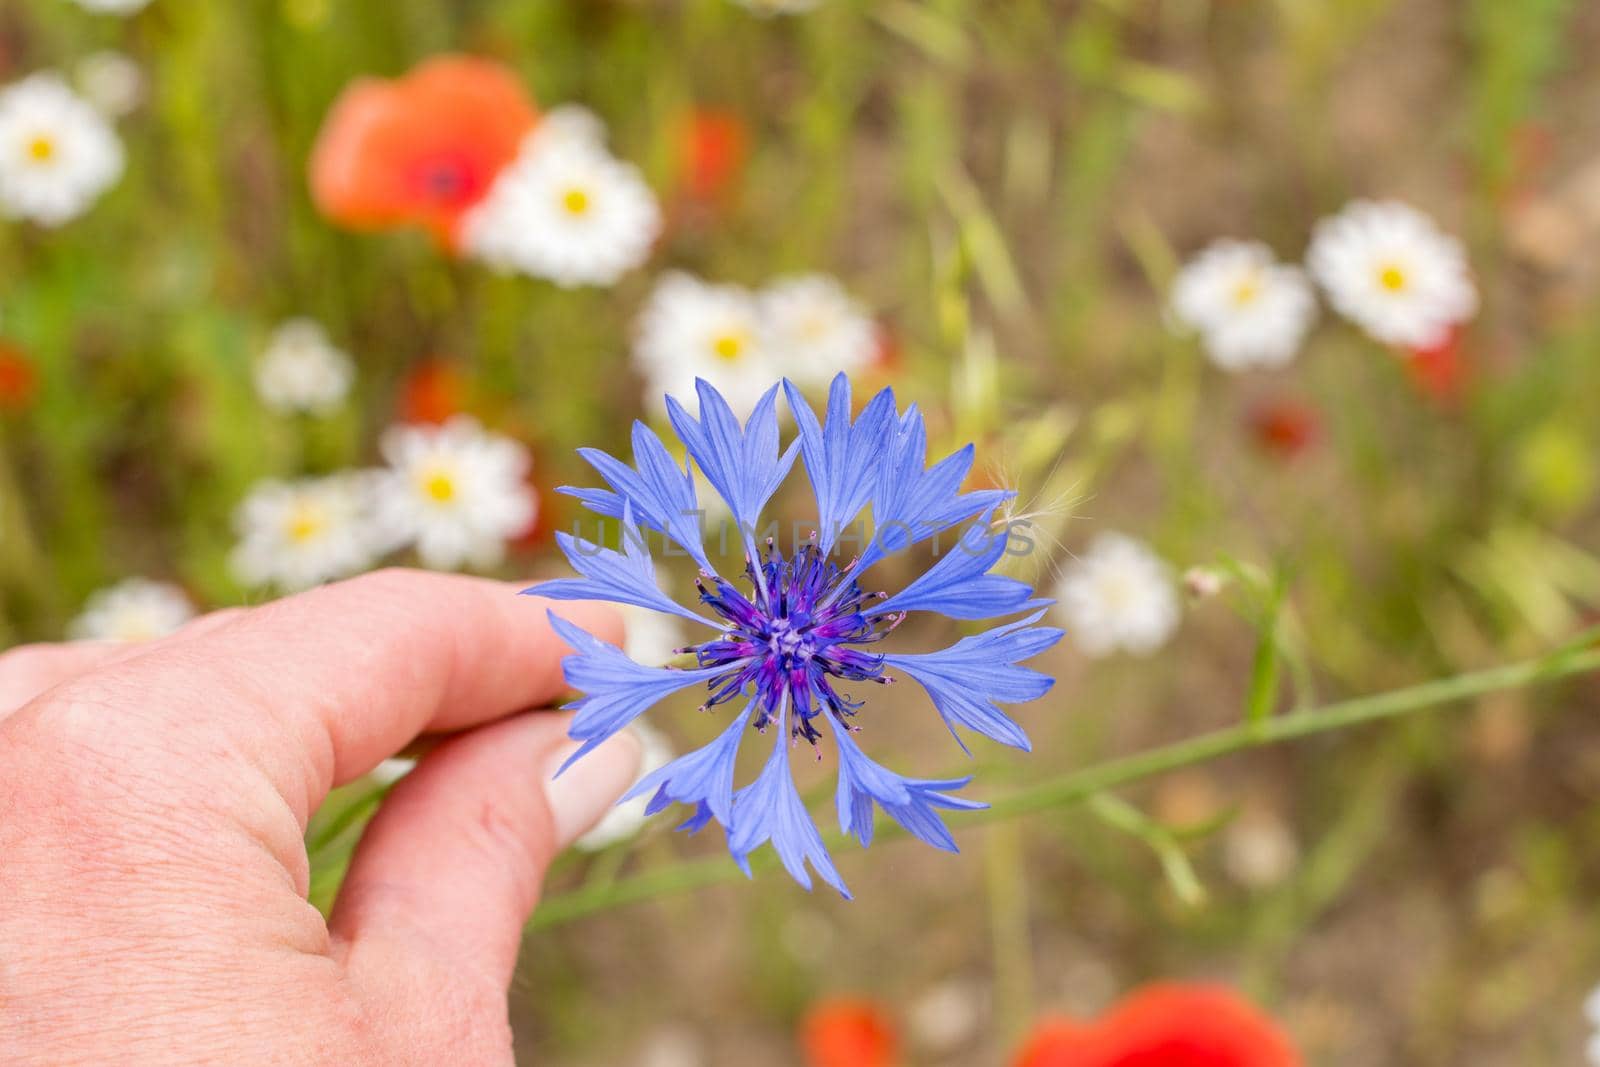 blue cornflower flower in the middle of flower field flower portrait,background by KaterinaDalemans